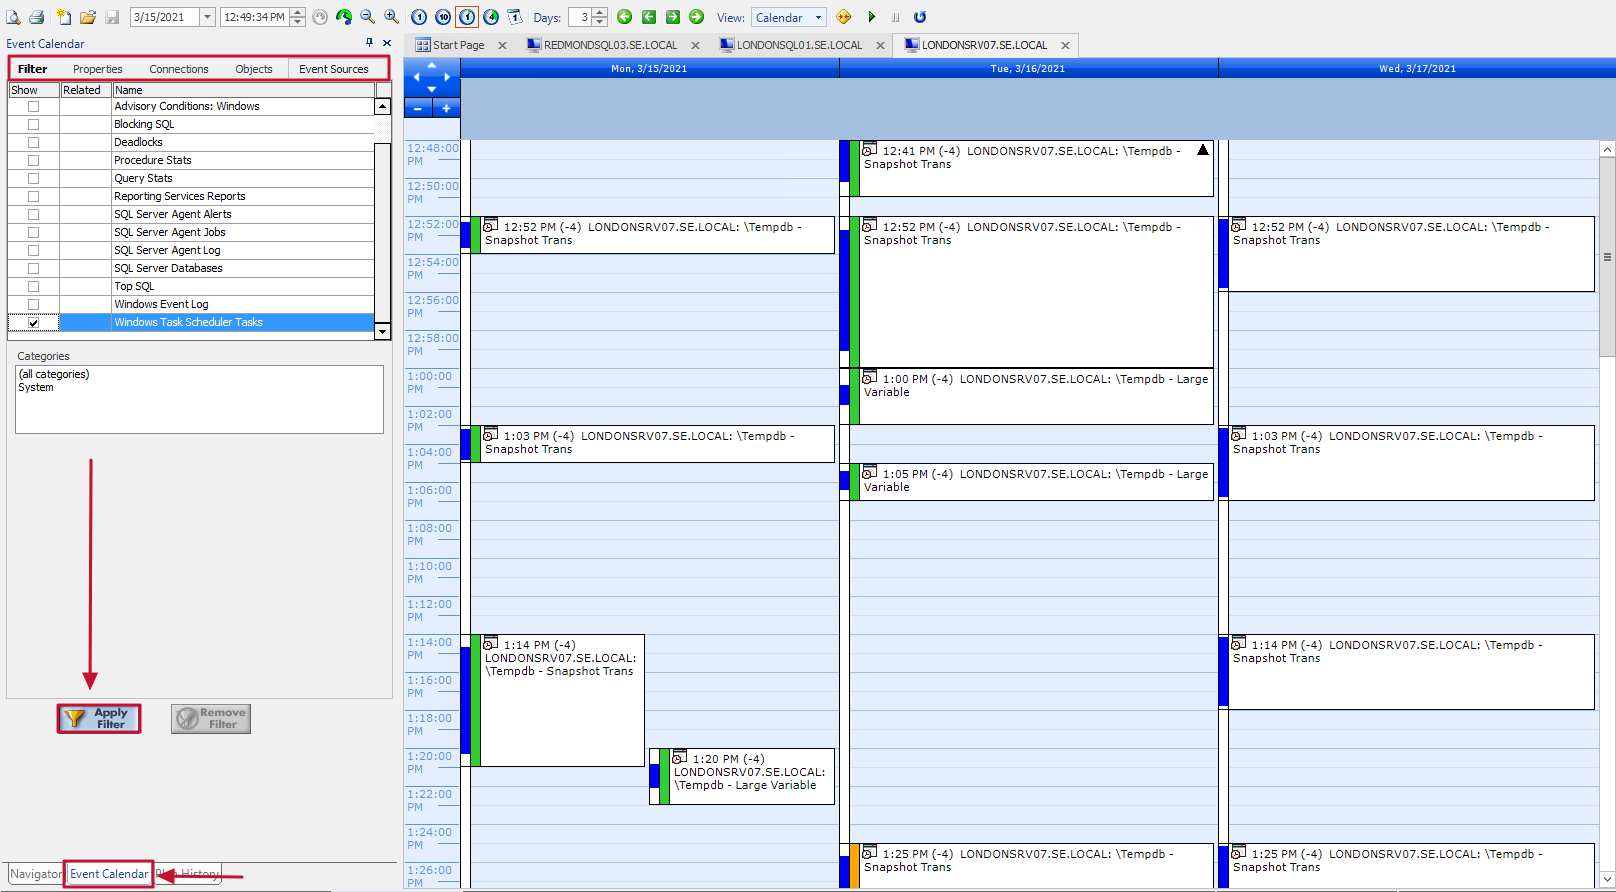 Event calendar filter showing only Windows Task Scheduler Tasks across 3 days